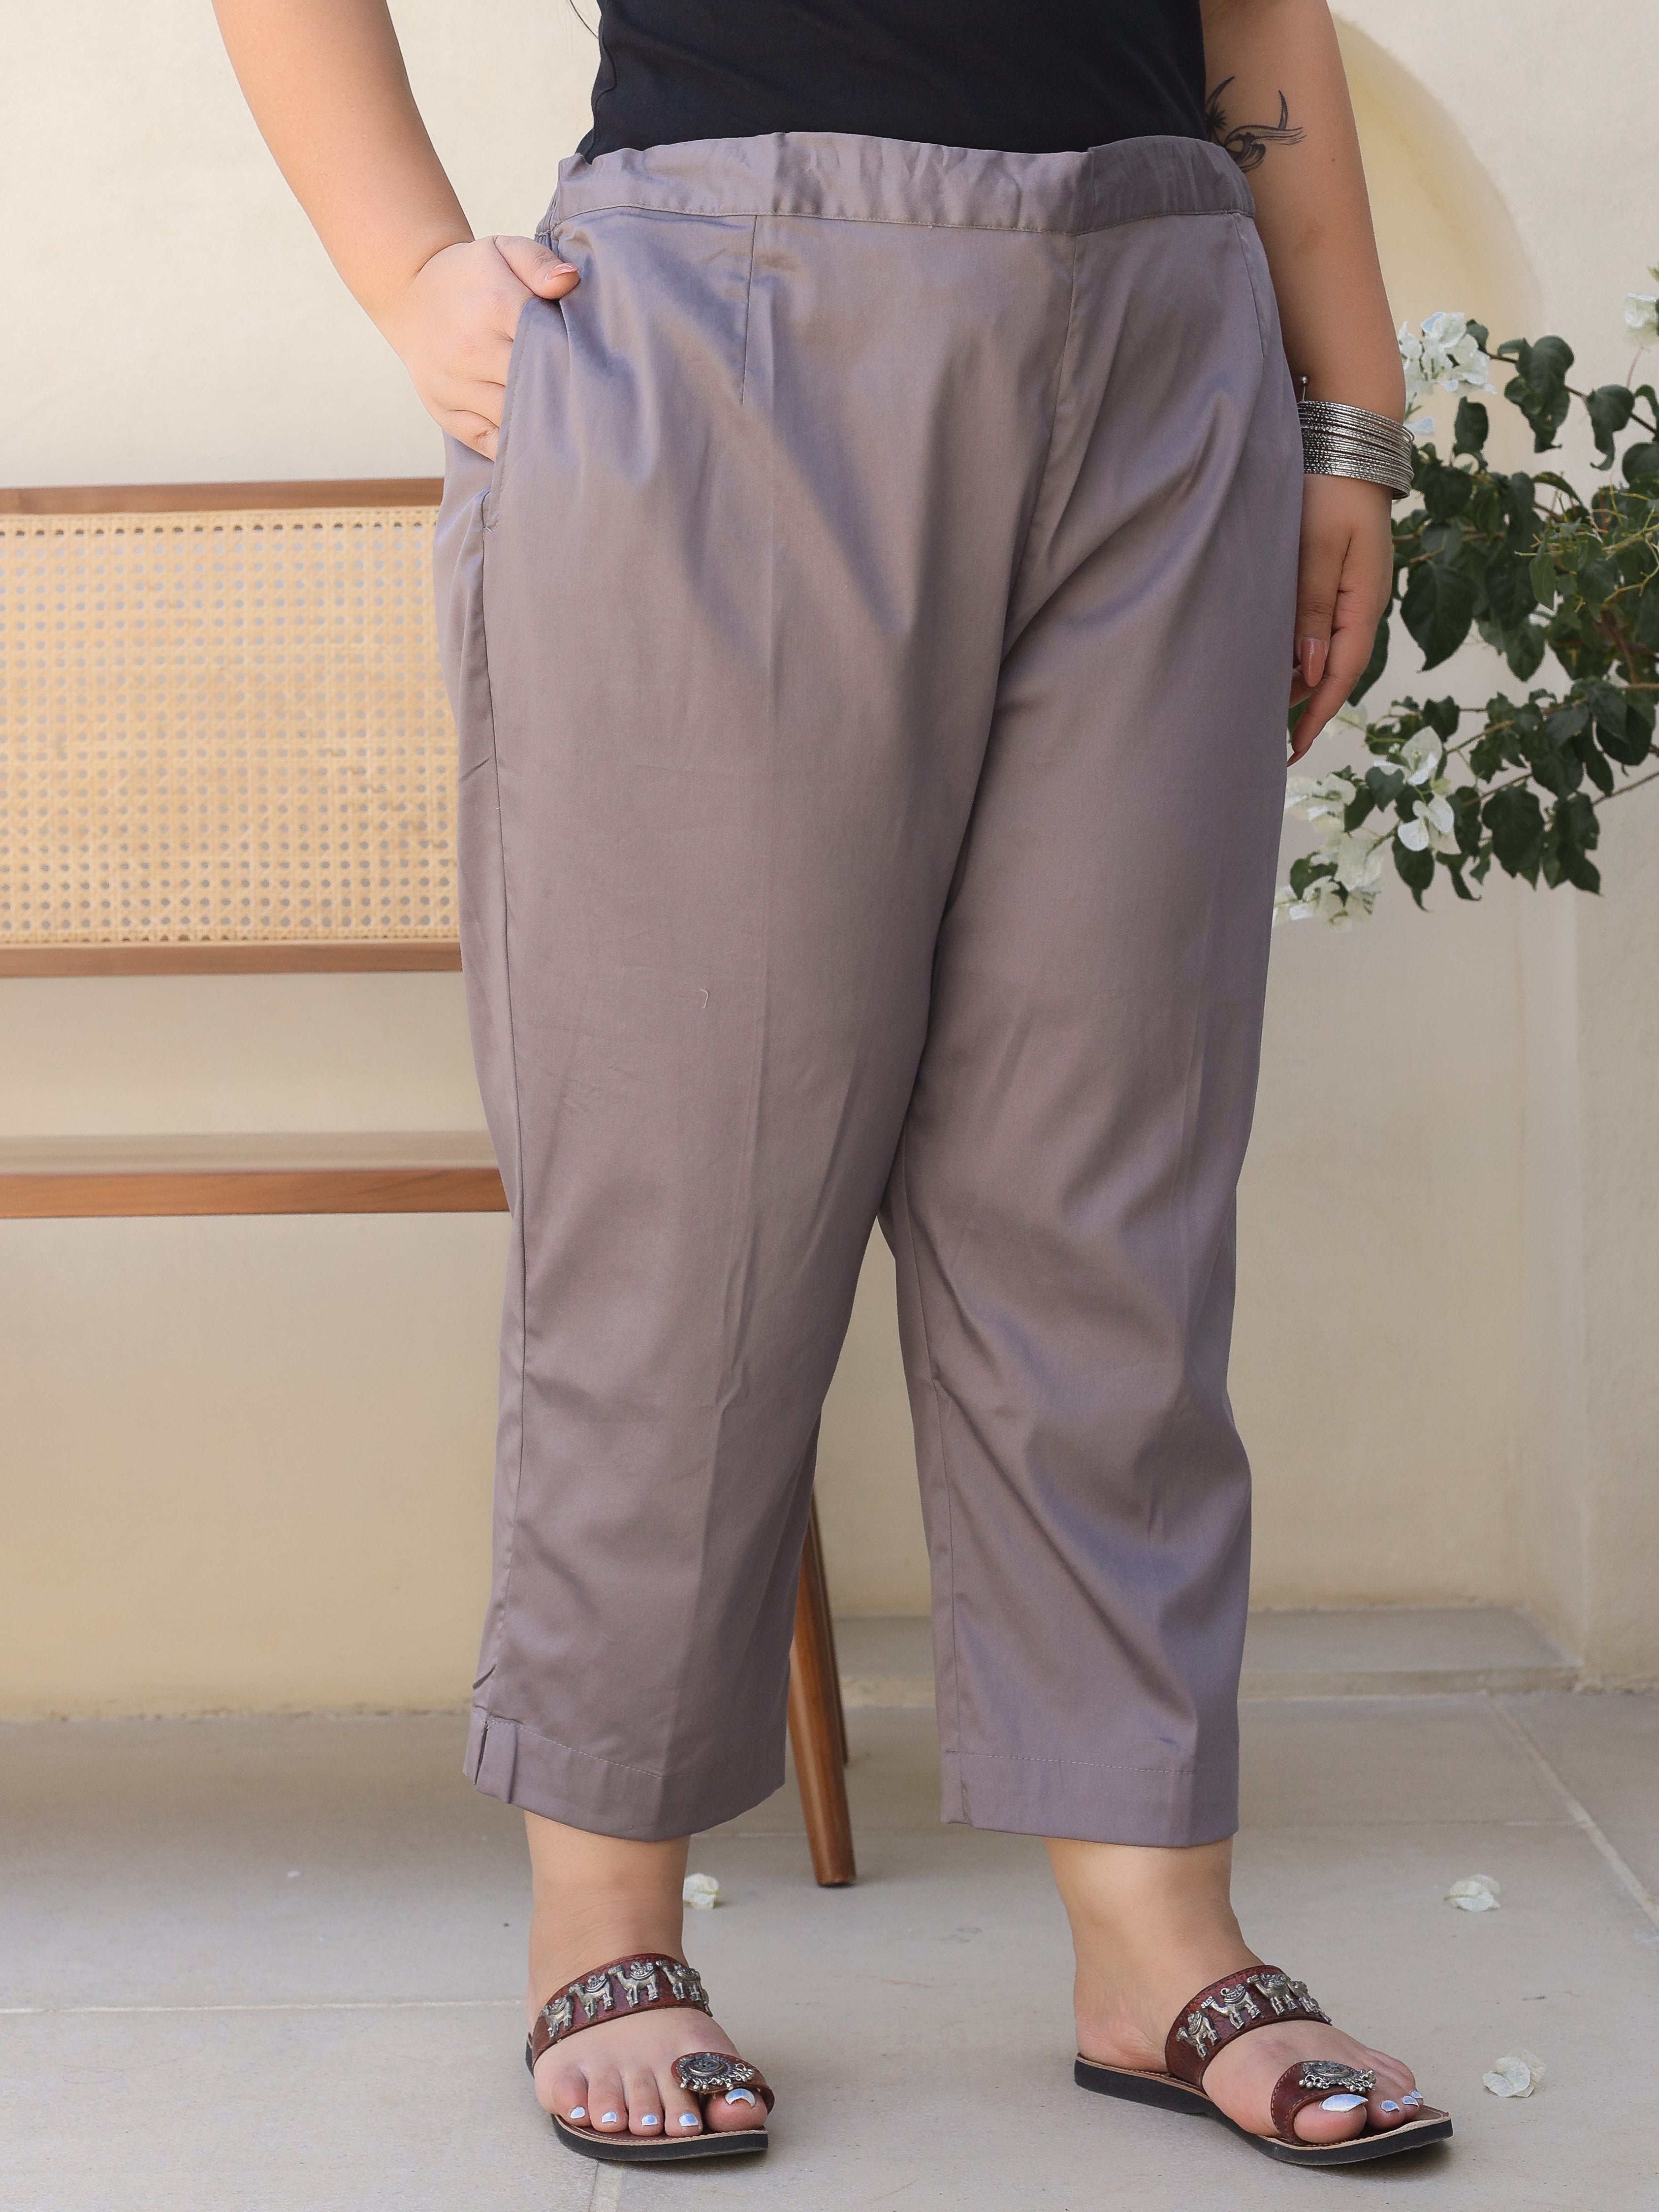 Juniper Grey Solid Lycra Women Drawstring Plus Size Pants With Single Side Pocket